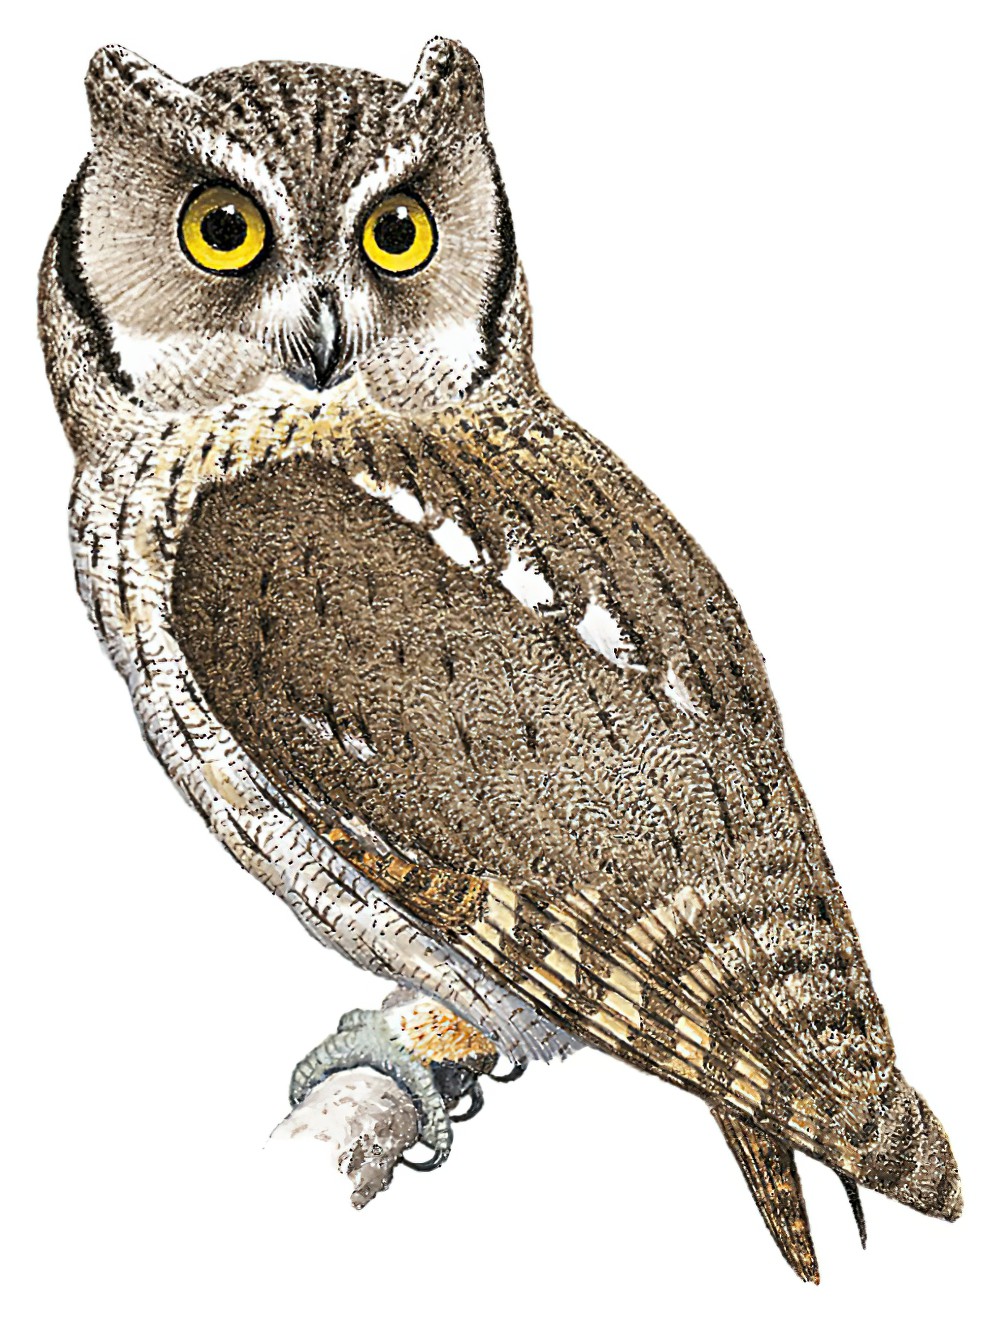 Tropical Screech-Owl / Megascops choliba